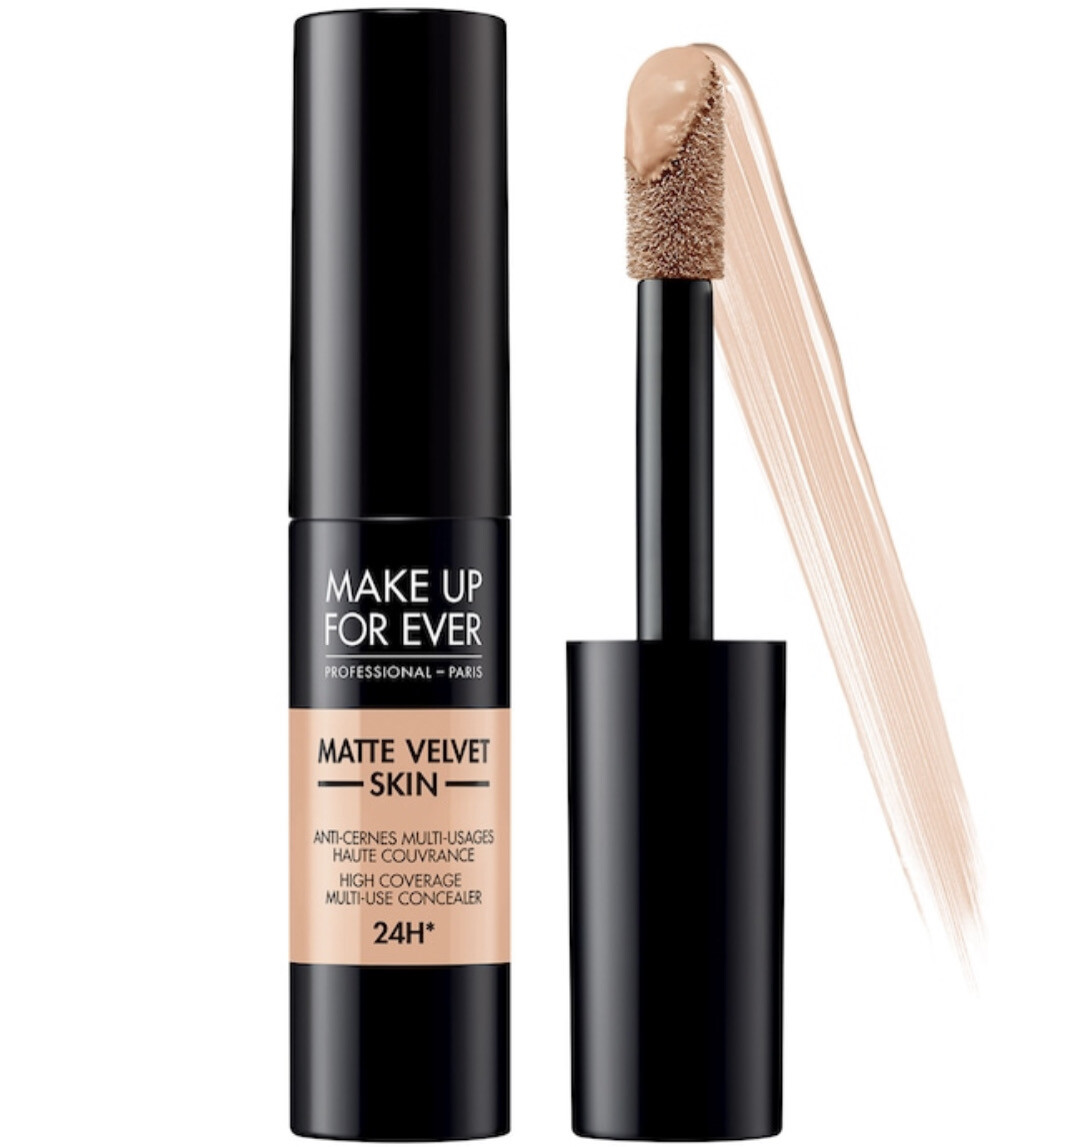 Make Up For Ever - Matte Velvet Skin High Coverage Multi-Use Concealer | 2.3 - Ivory - for fair skin with neutral-pink undertones